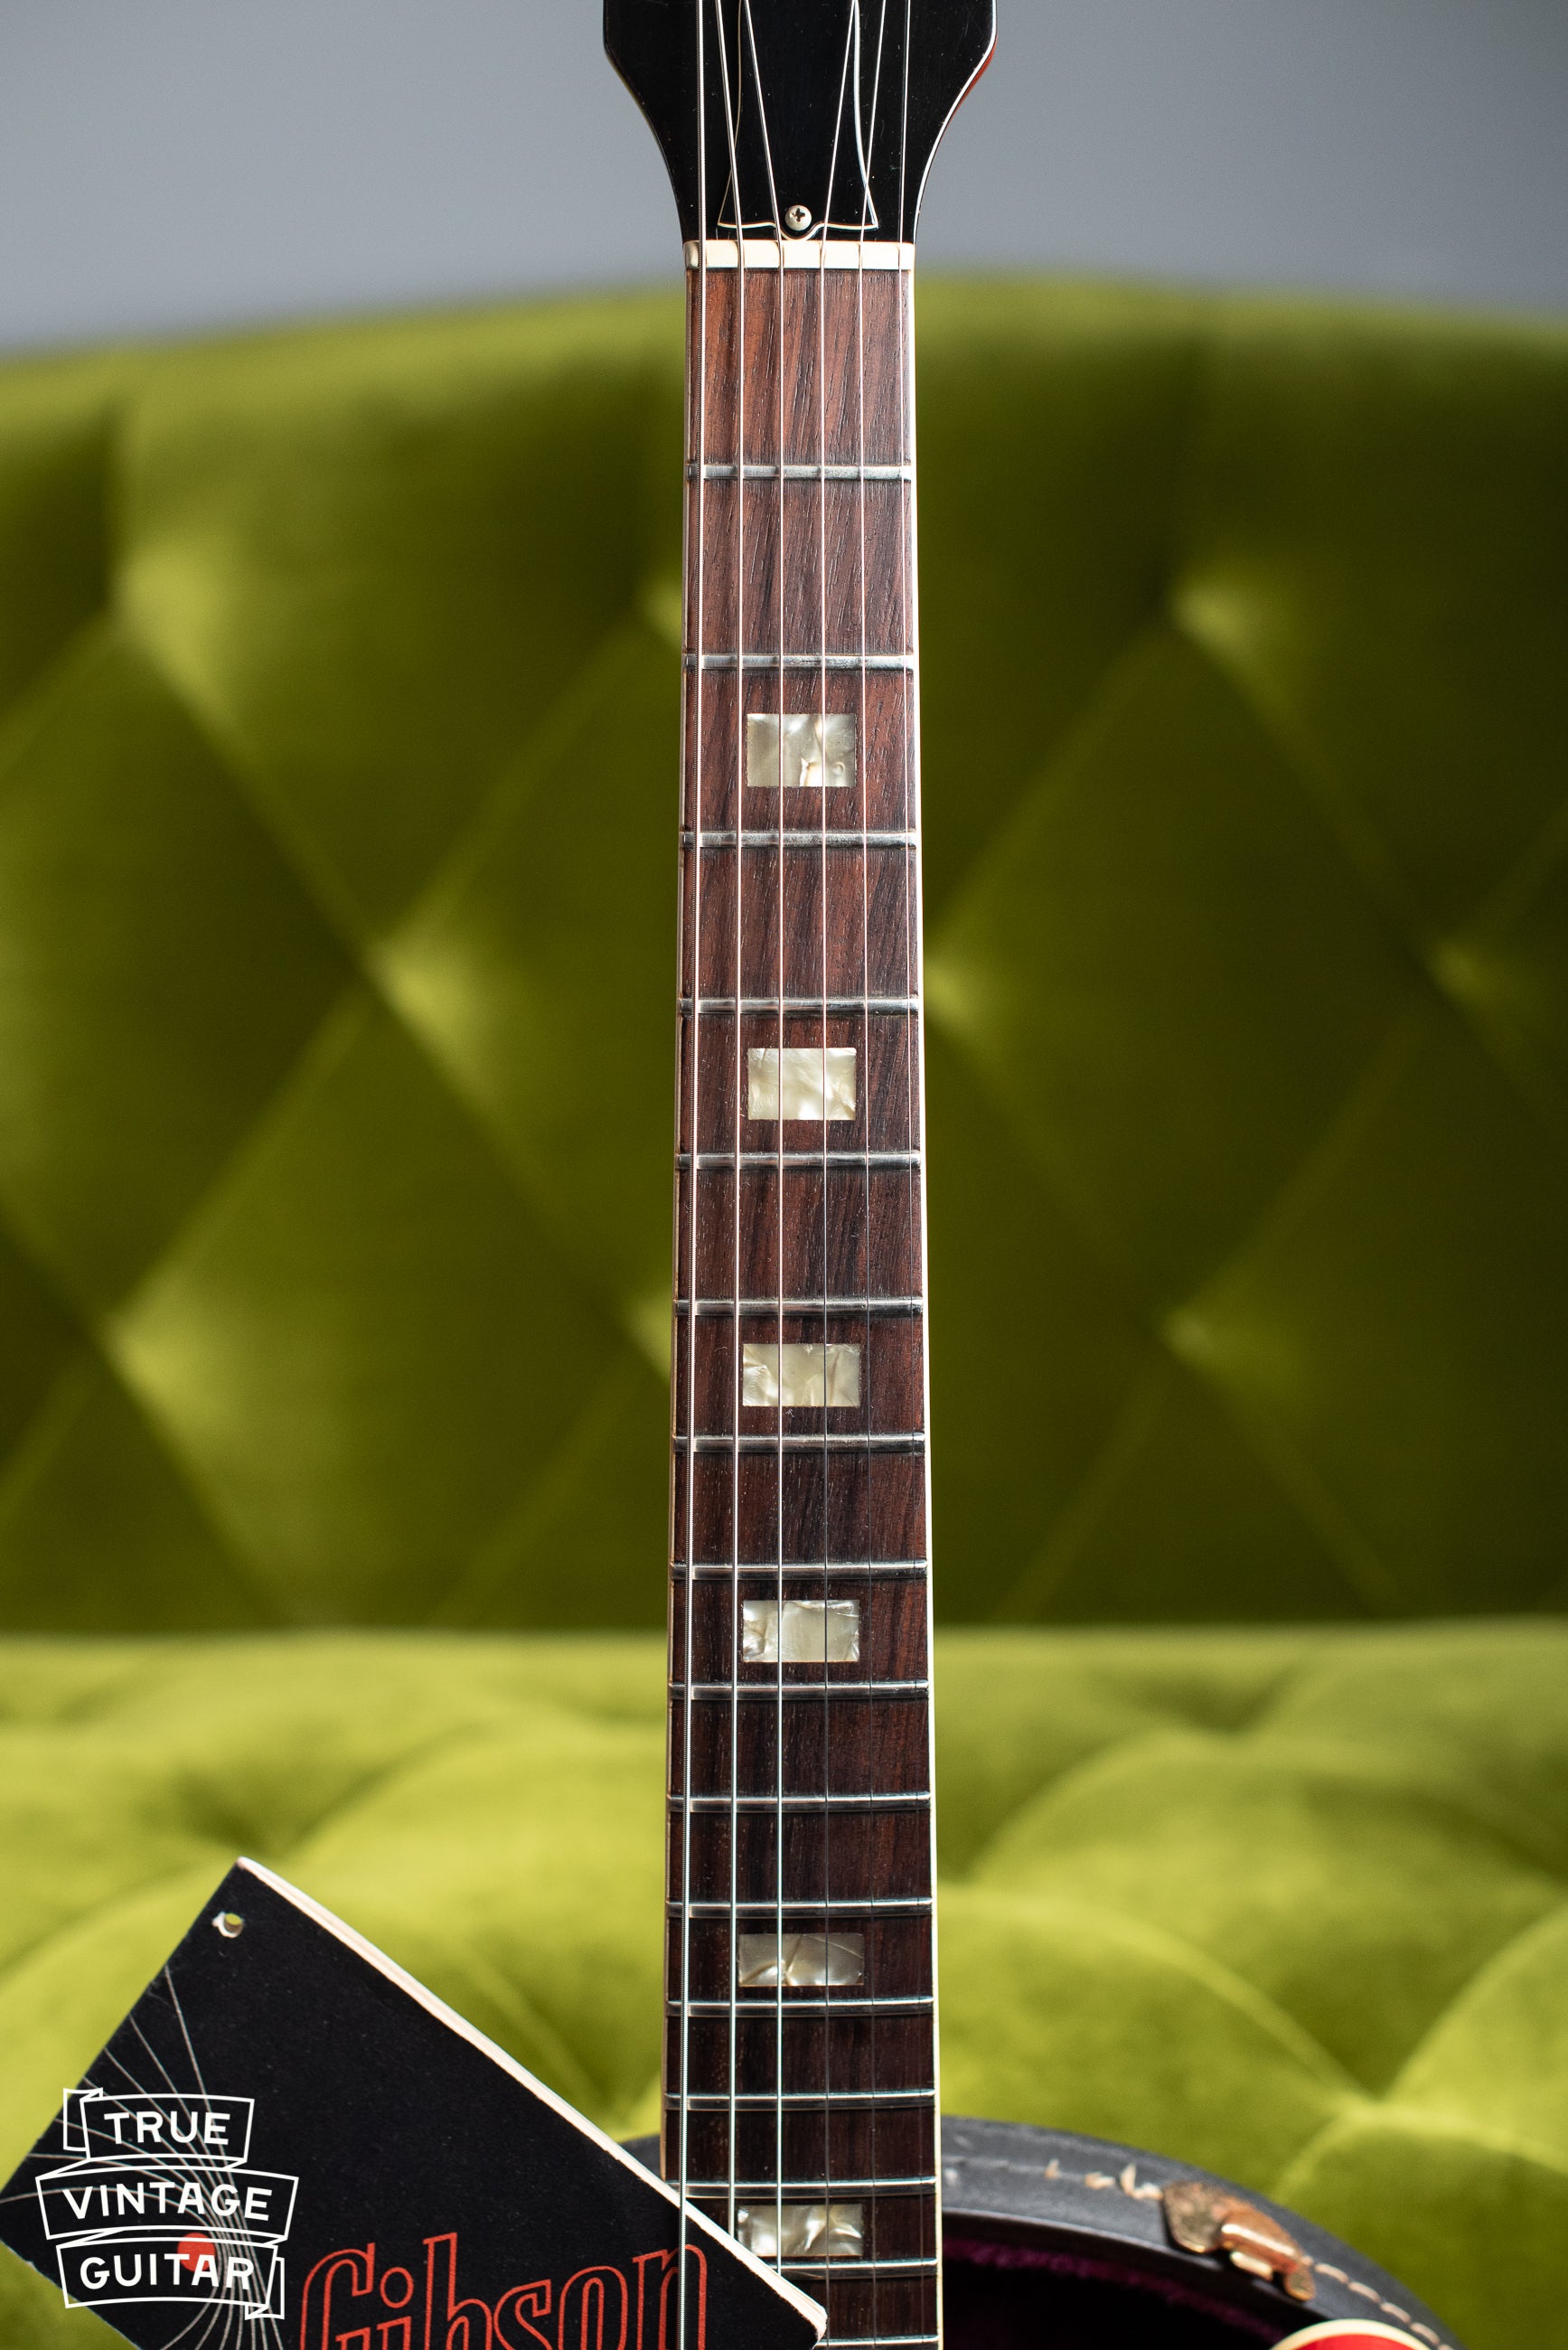 Rosewood fretboard, Block fret markers, 1973 Gibson ES-335 TD Cherry